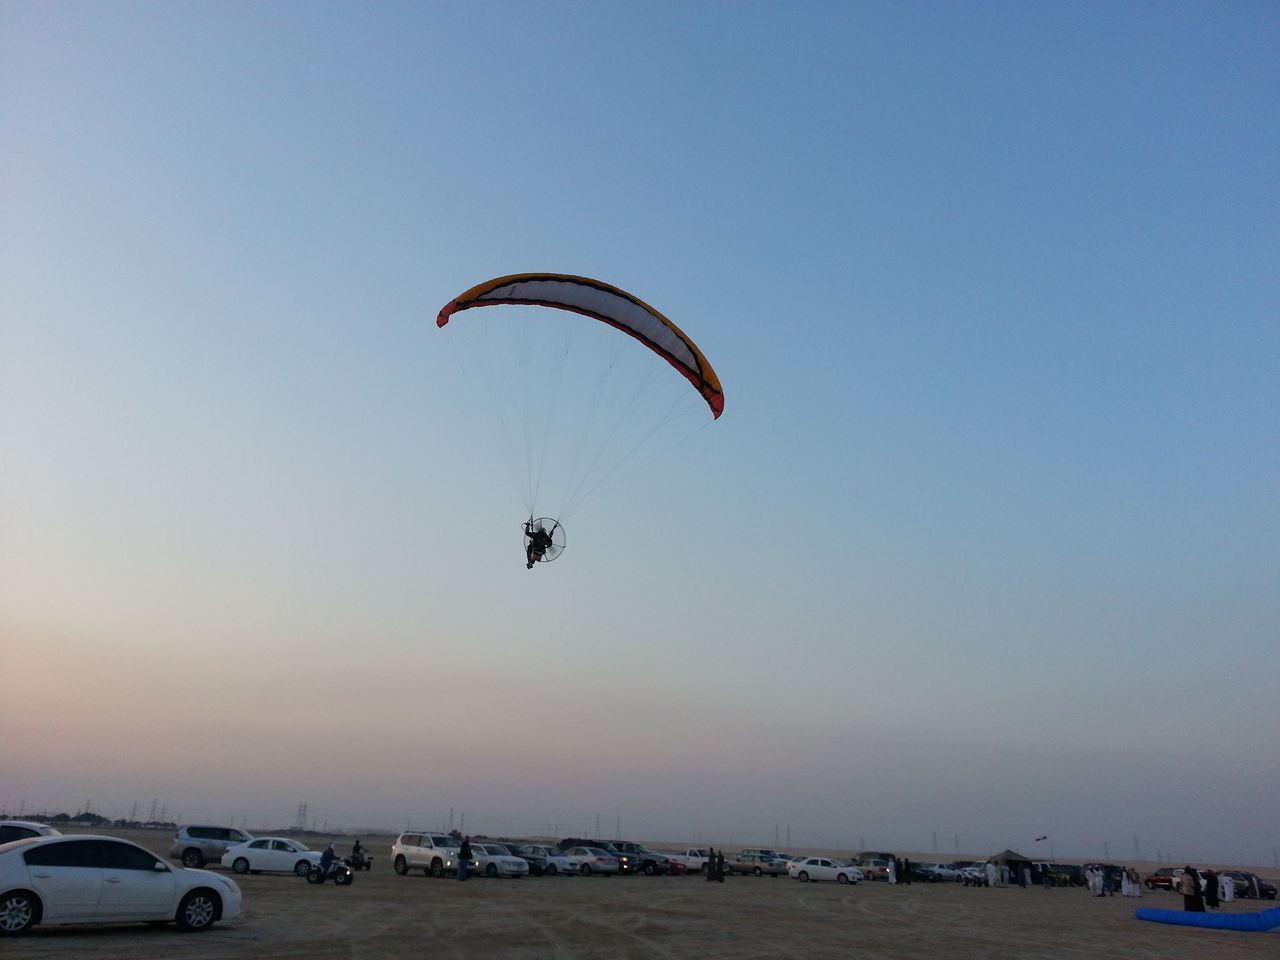 Man powered paragliding over landscape against sky during sunset